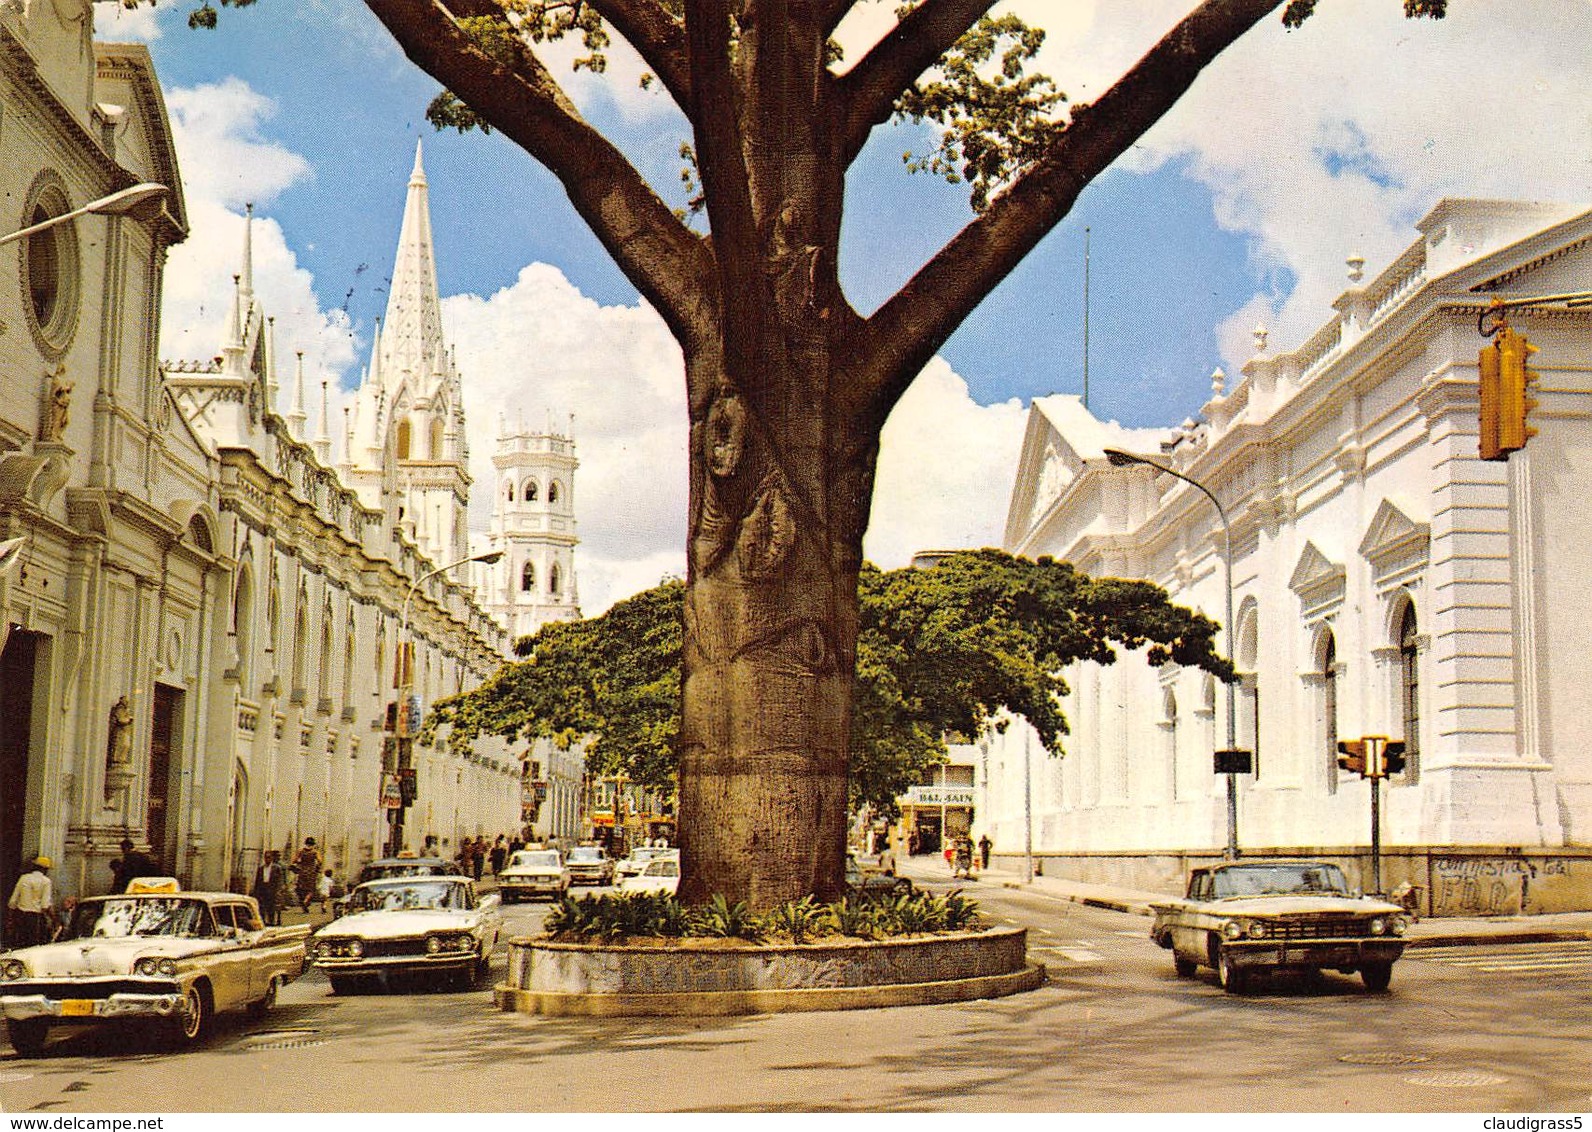 0599 "BIBLIOTECA NACIONAL I PALACIO LEGISLATIVO - CARACAS - VENEZUELA" CART. ORIG. SPEDITA 1978 - Venezuela